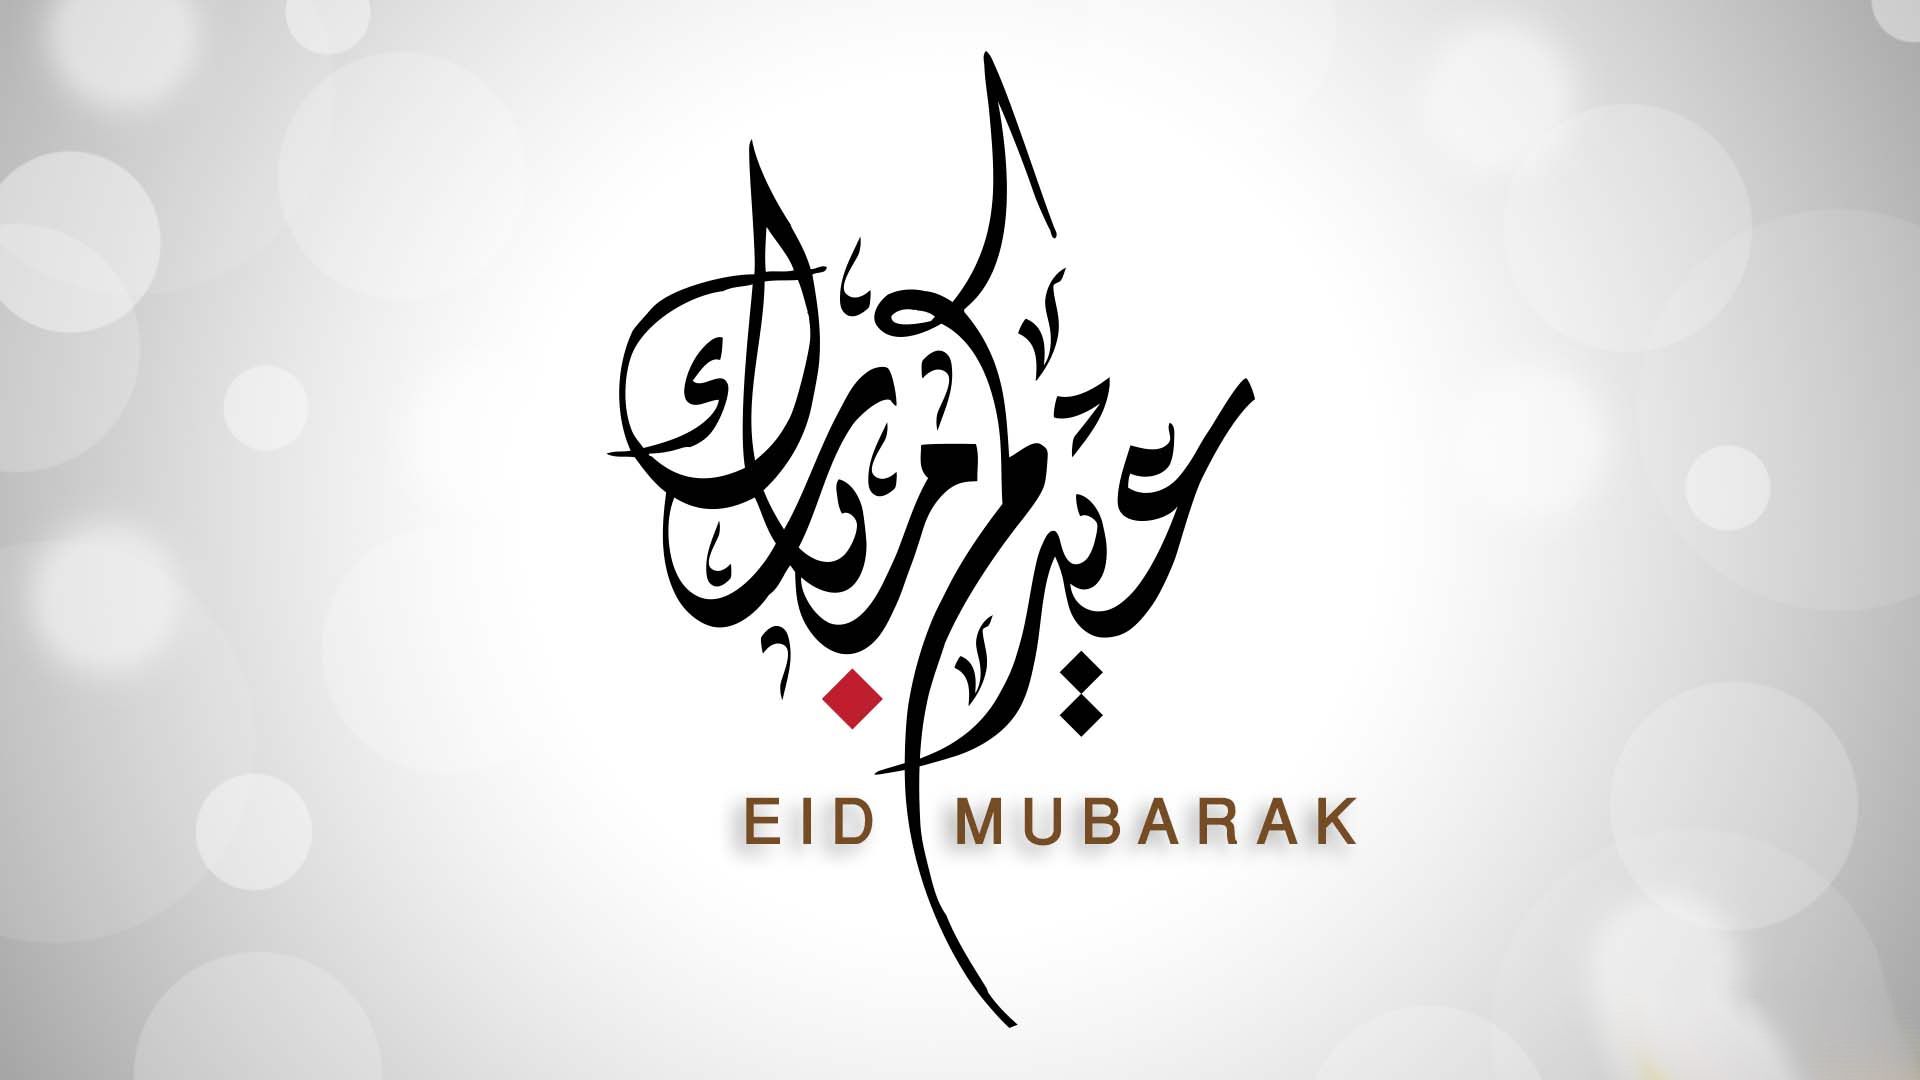 Eid Al Fitr Image & Wallpaper 2020 With English Greetings